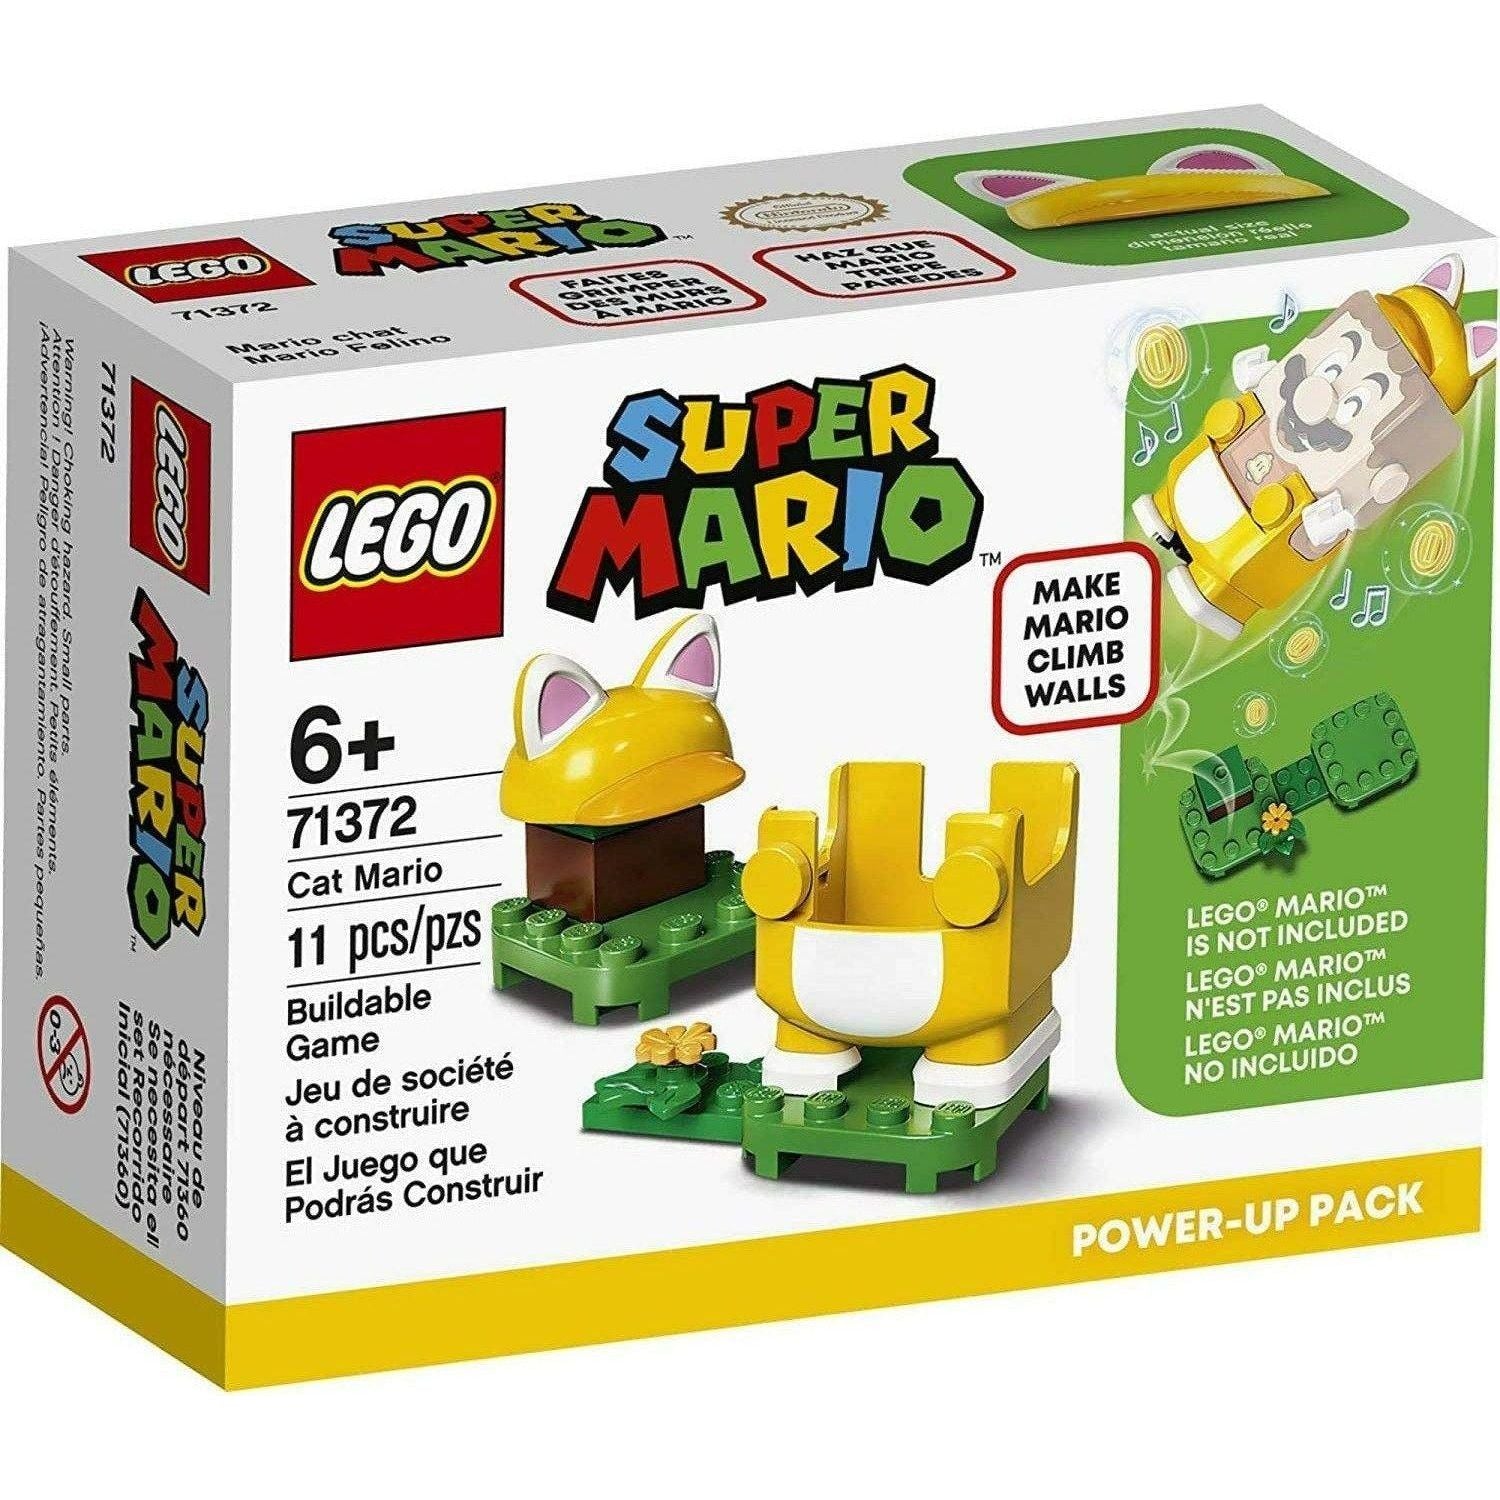 LEGO 71372 Super Mario Cat Mario (Power-Up Pack) Building Kit (11 Pieces) - BumbleToys - 6+ Years, Boys, Lego, OXE, Super Mario